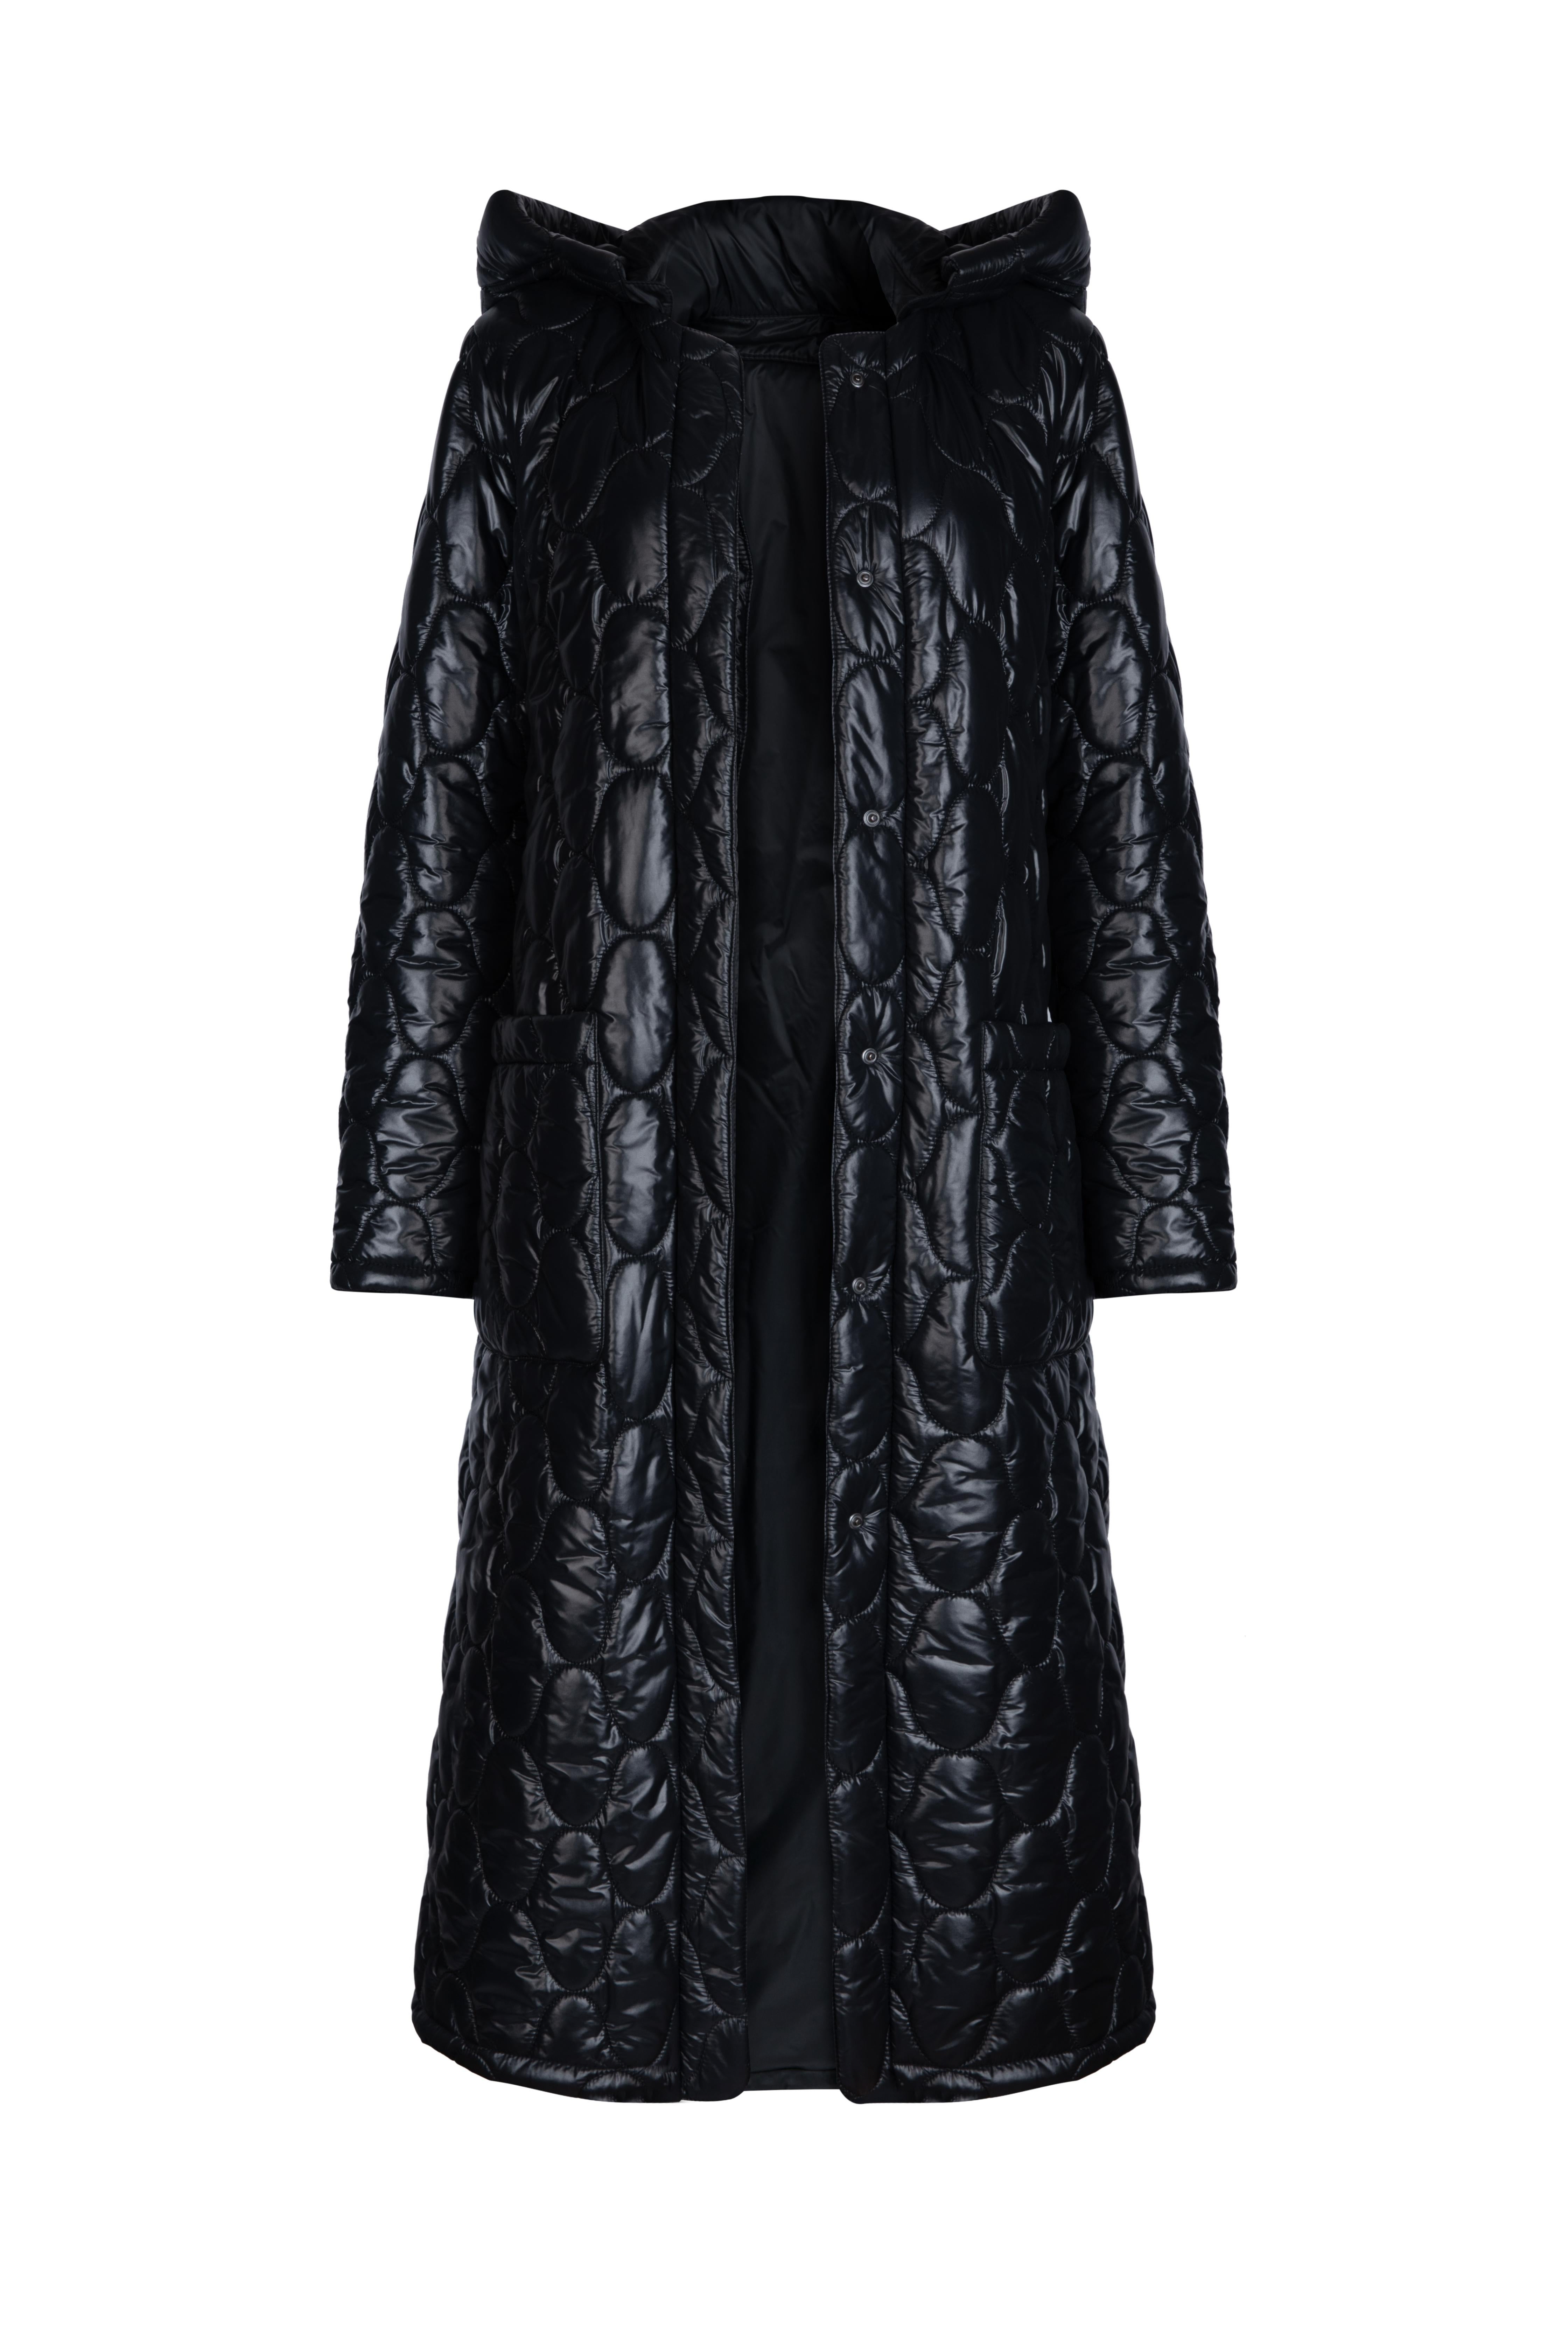 Verheyen London Aurora Quilted Coat with detachable hood - Size uk 12  For Sale 3